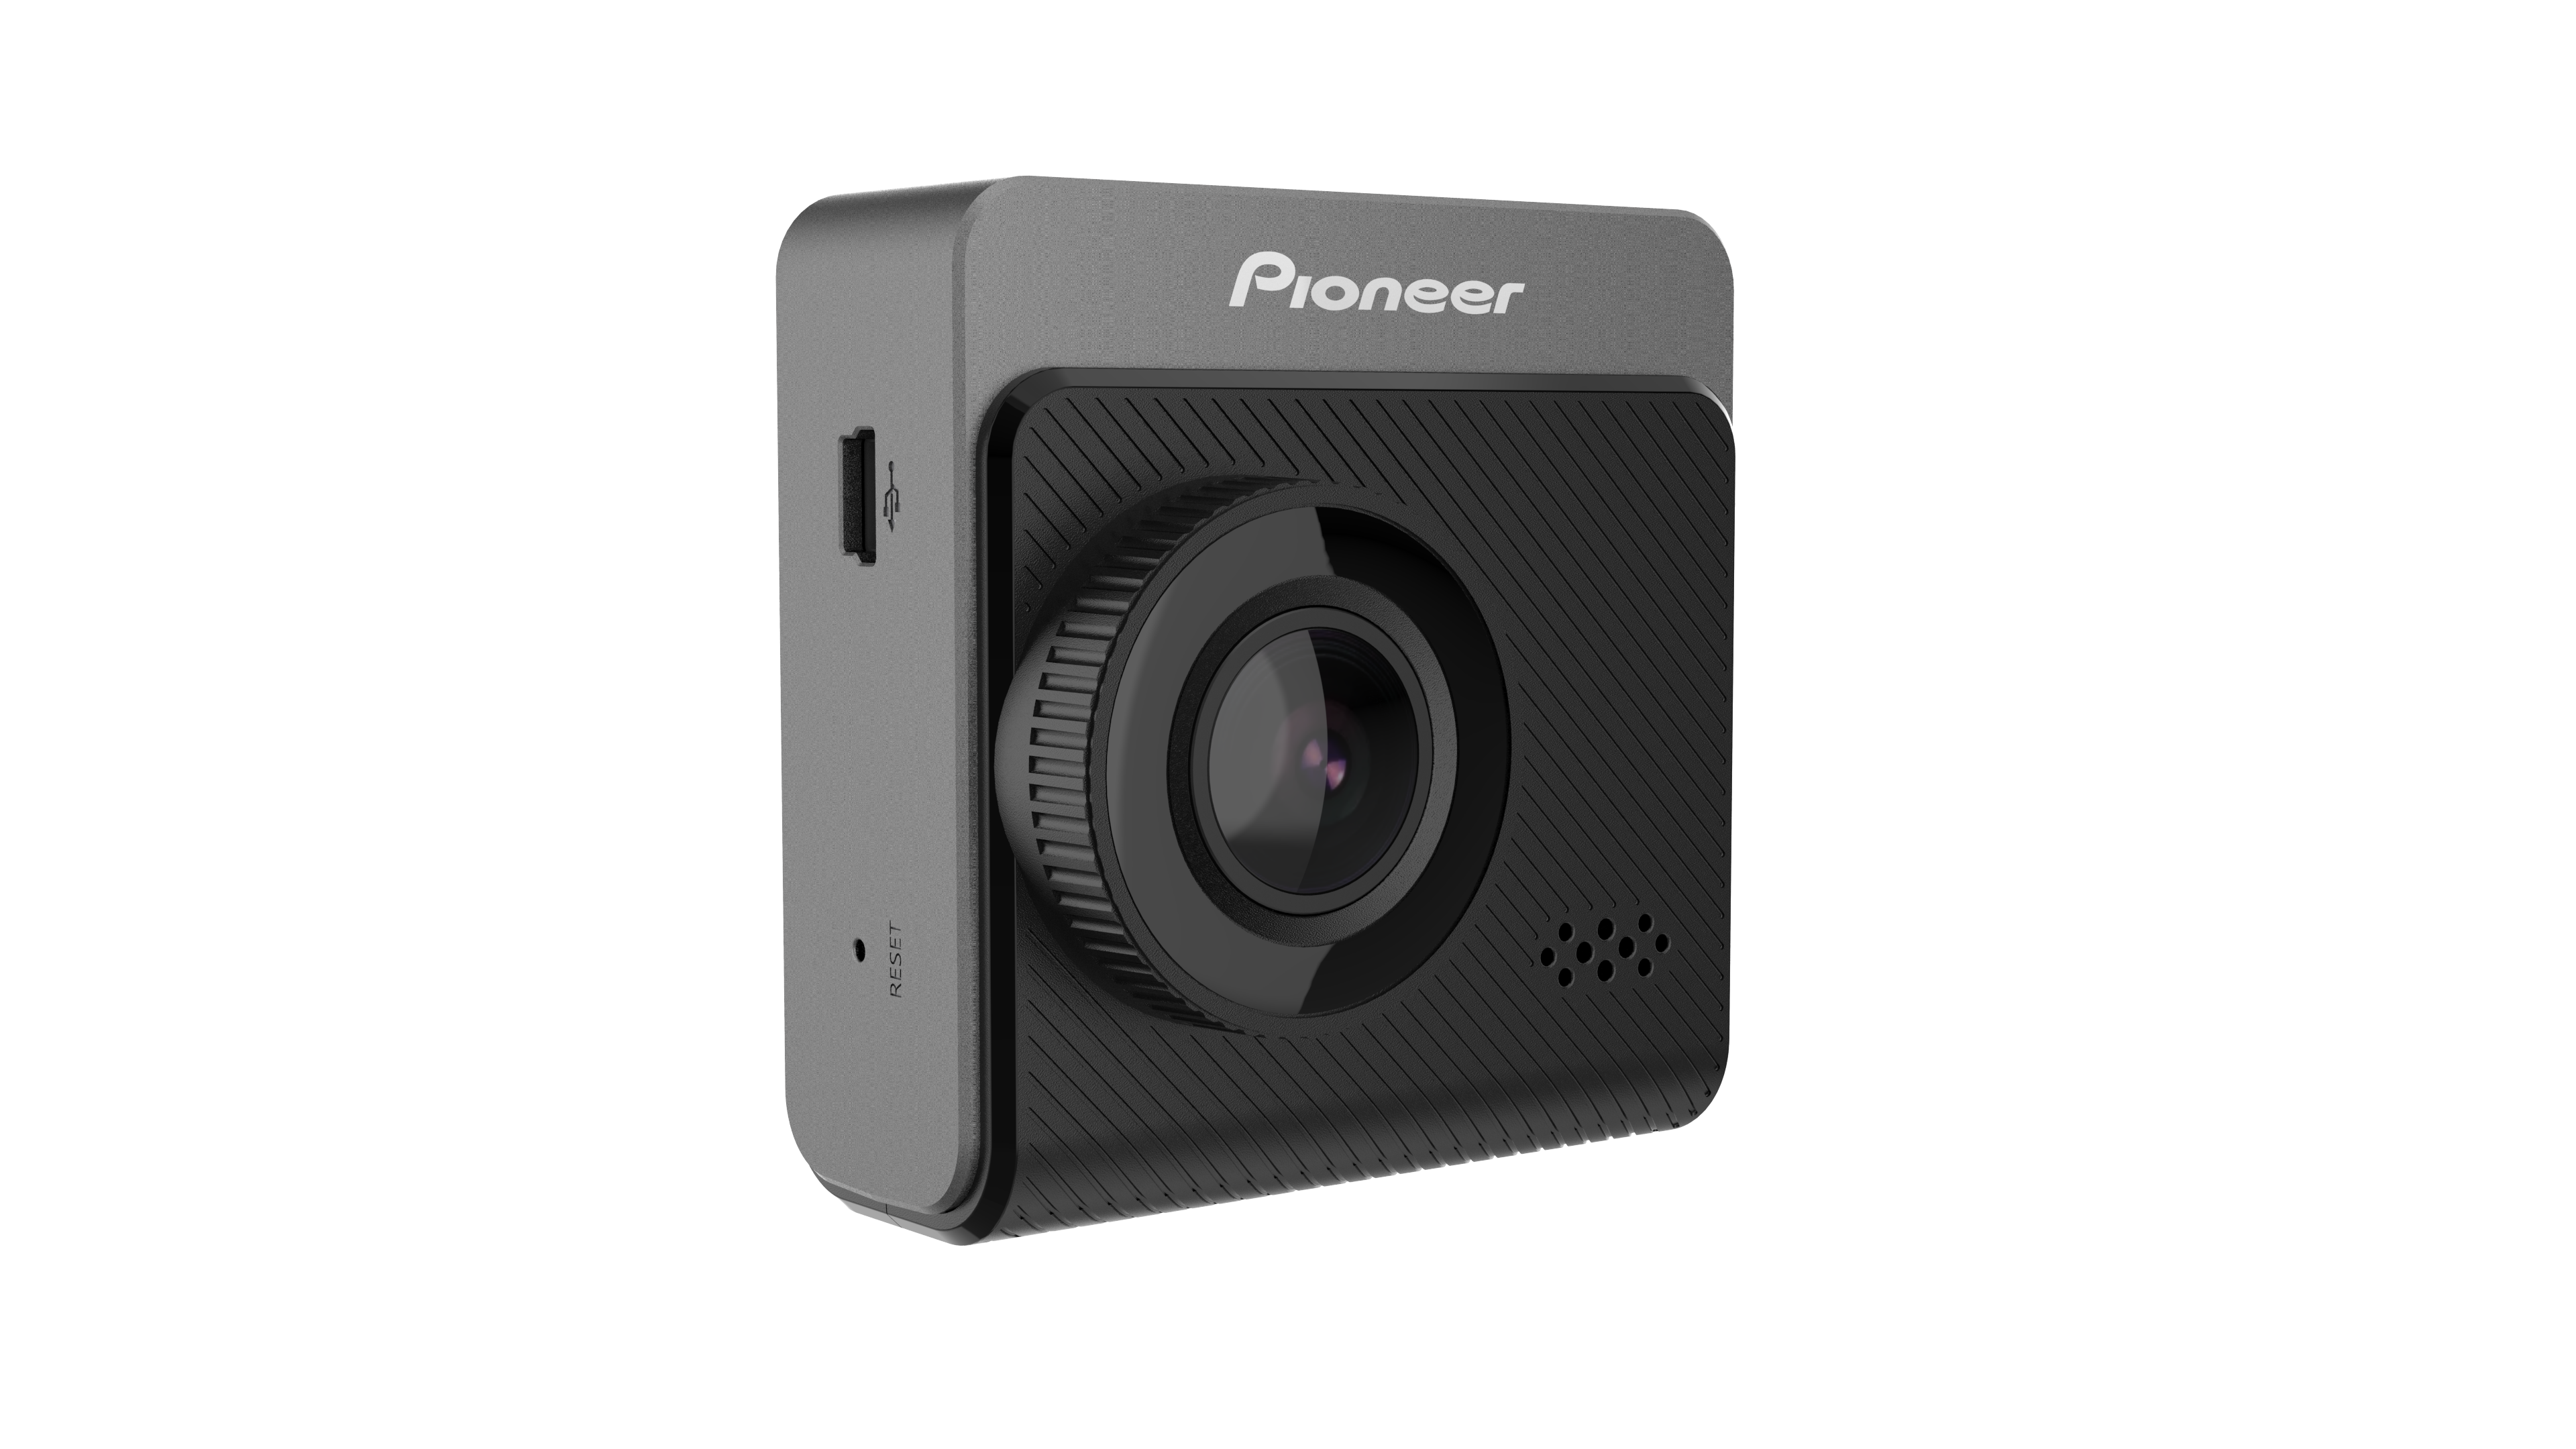 Pioneer Full HD Dashboard Camera VREC-130RS